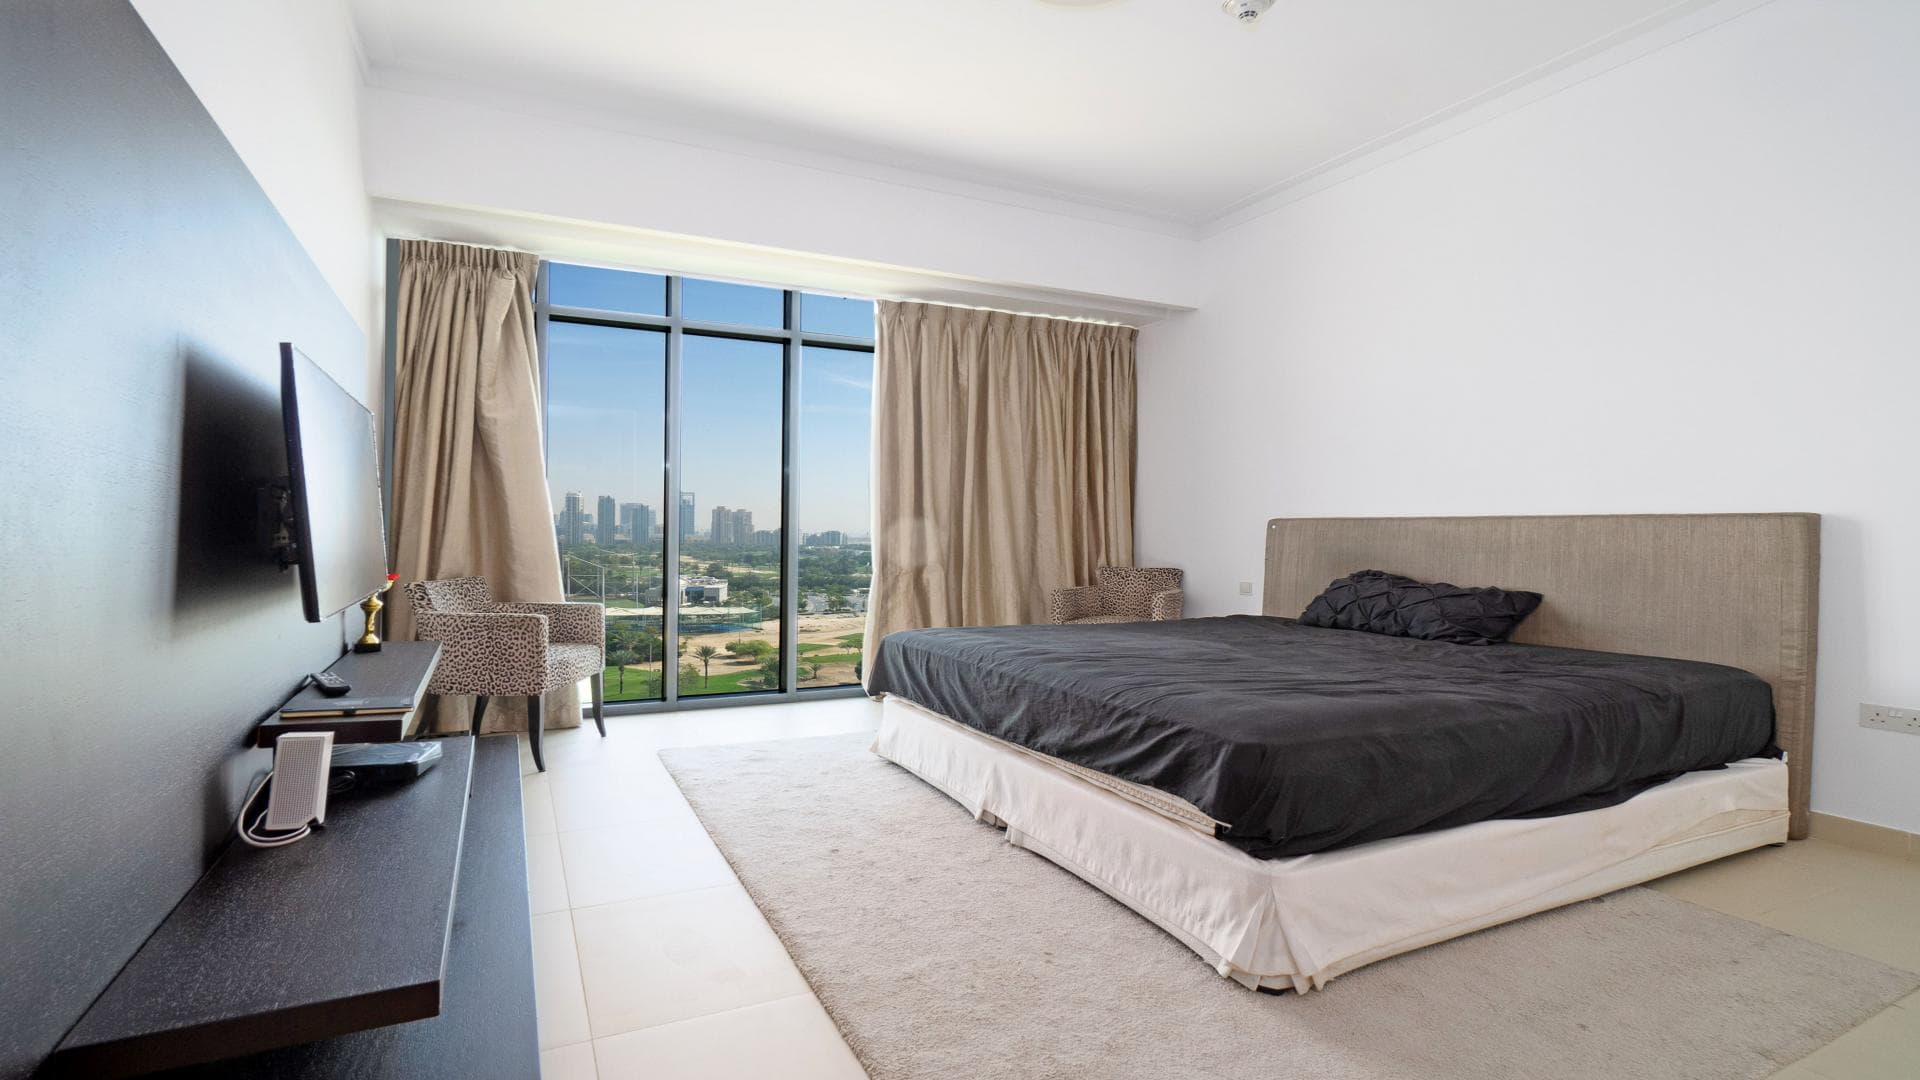 4 Bedroom Apartment For Rent Vida Residence Lp19009 30656406b6ad9a00.jpg